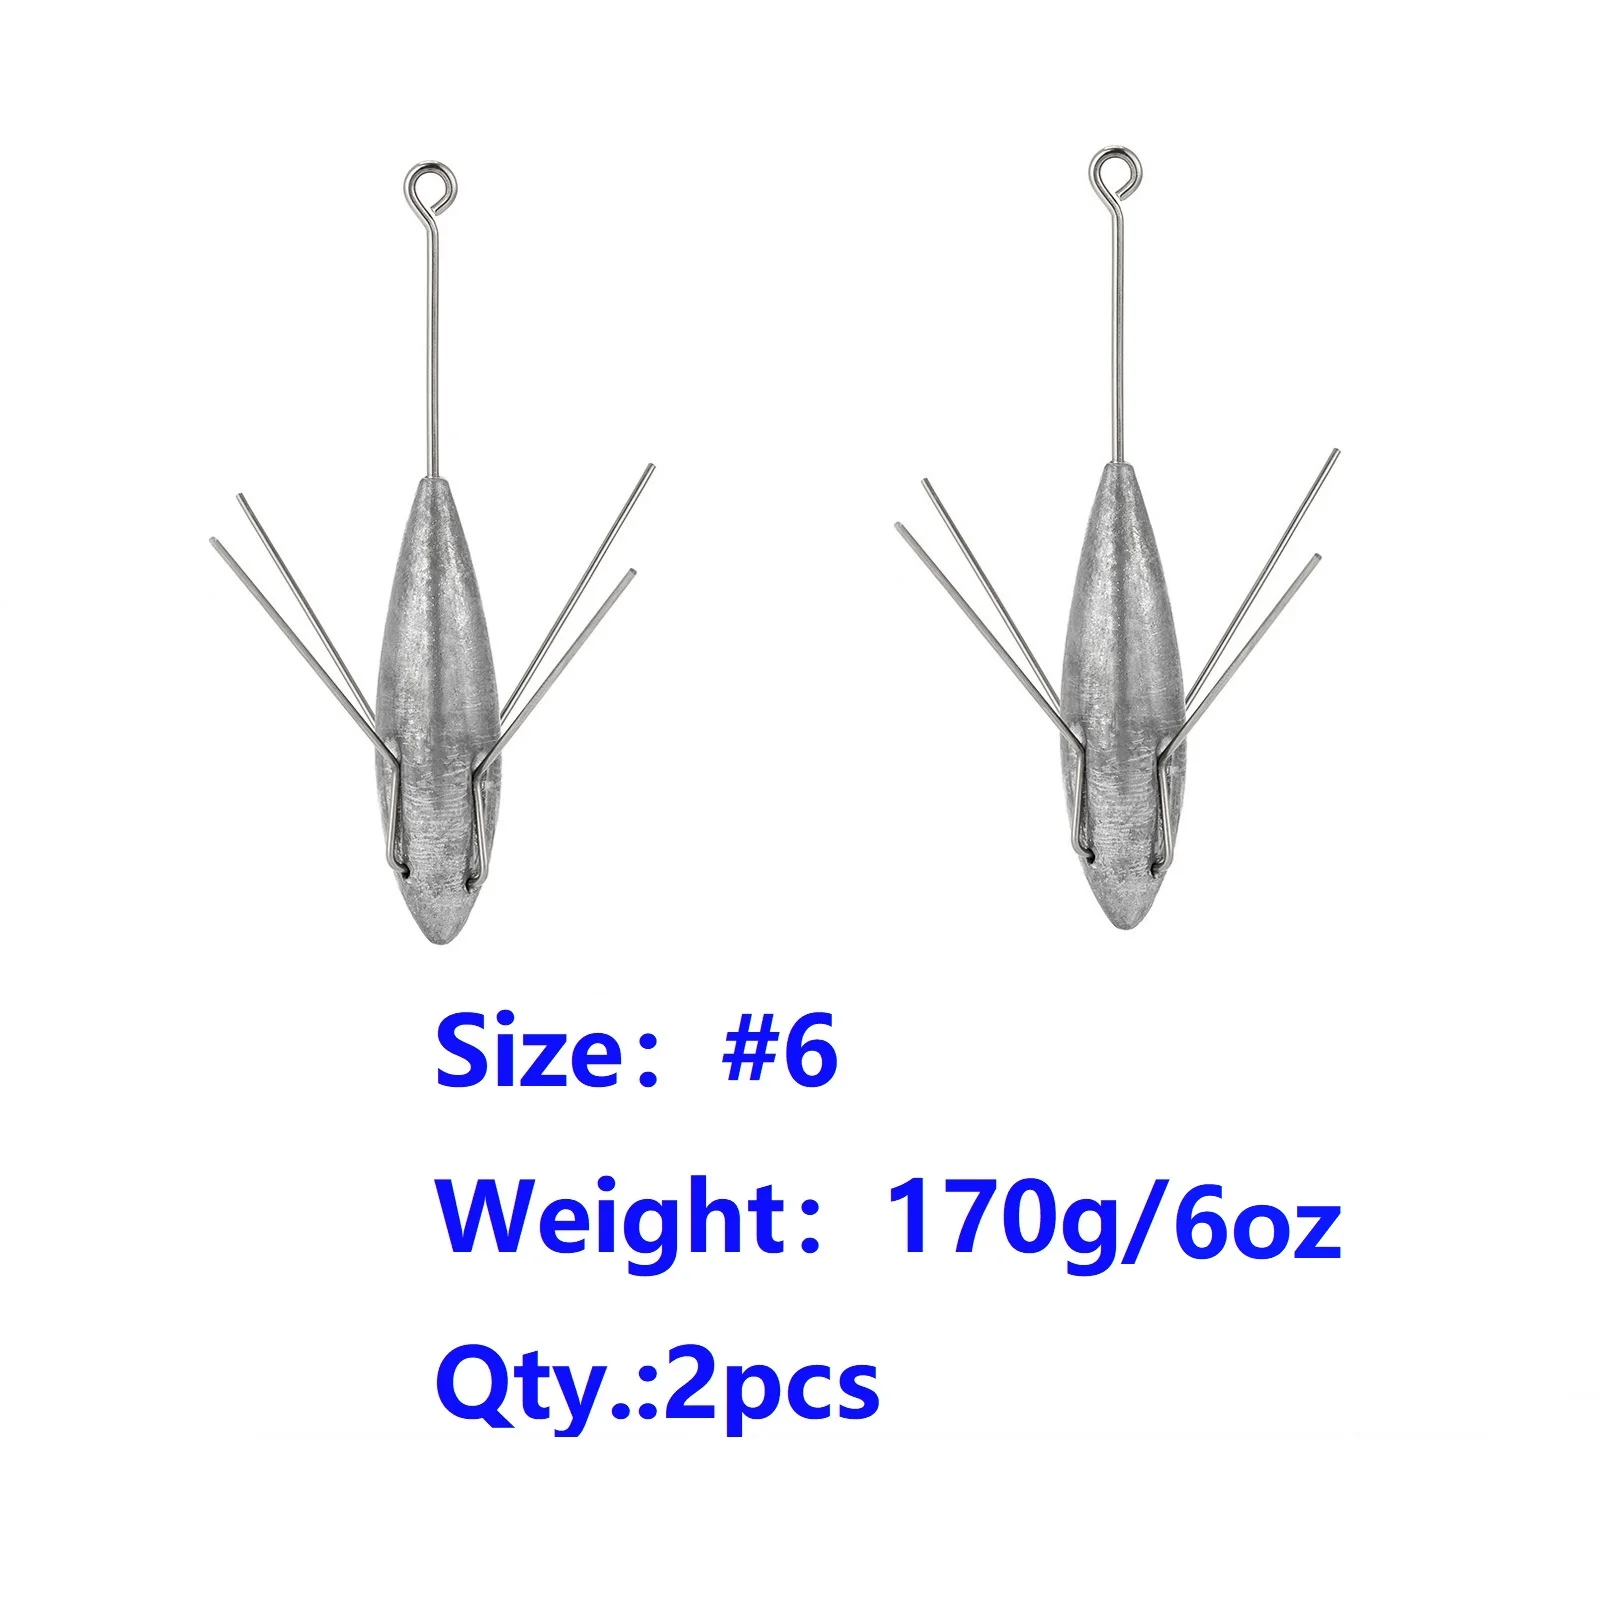 2PCS Sputnik Sinker Weight Lead Spider Long Tail Surf Fishing Saltwater  3oz-6oz